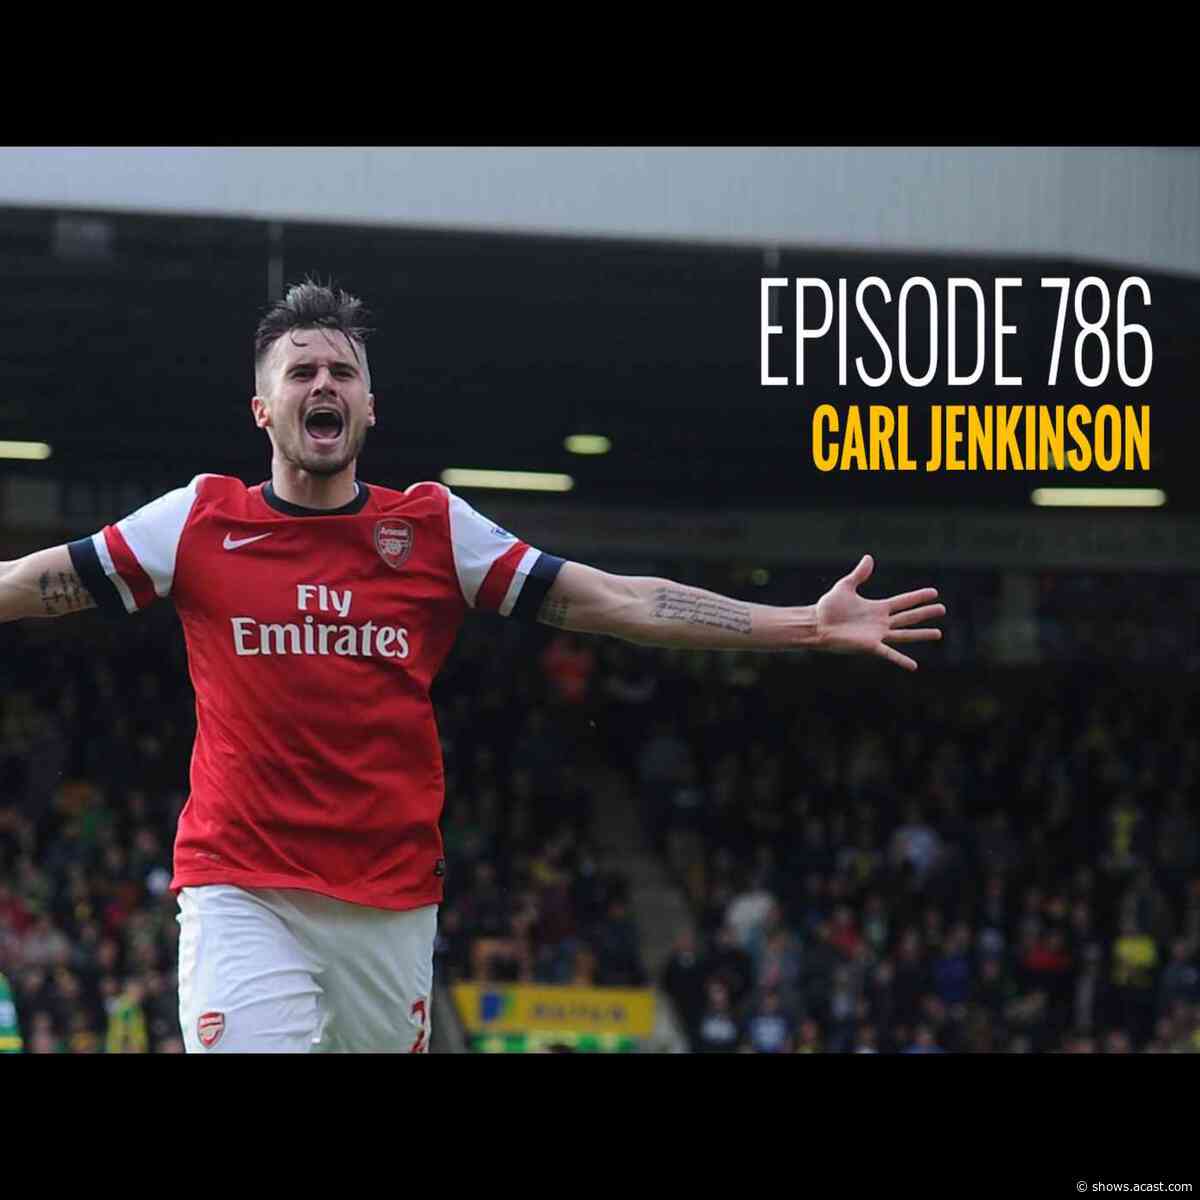 Episode 786 - Carl Jenkinson